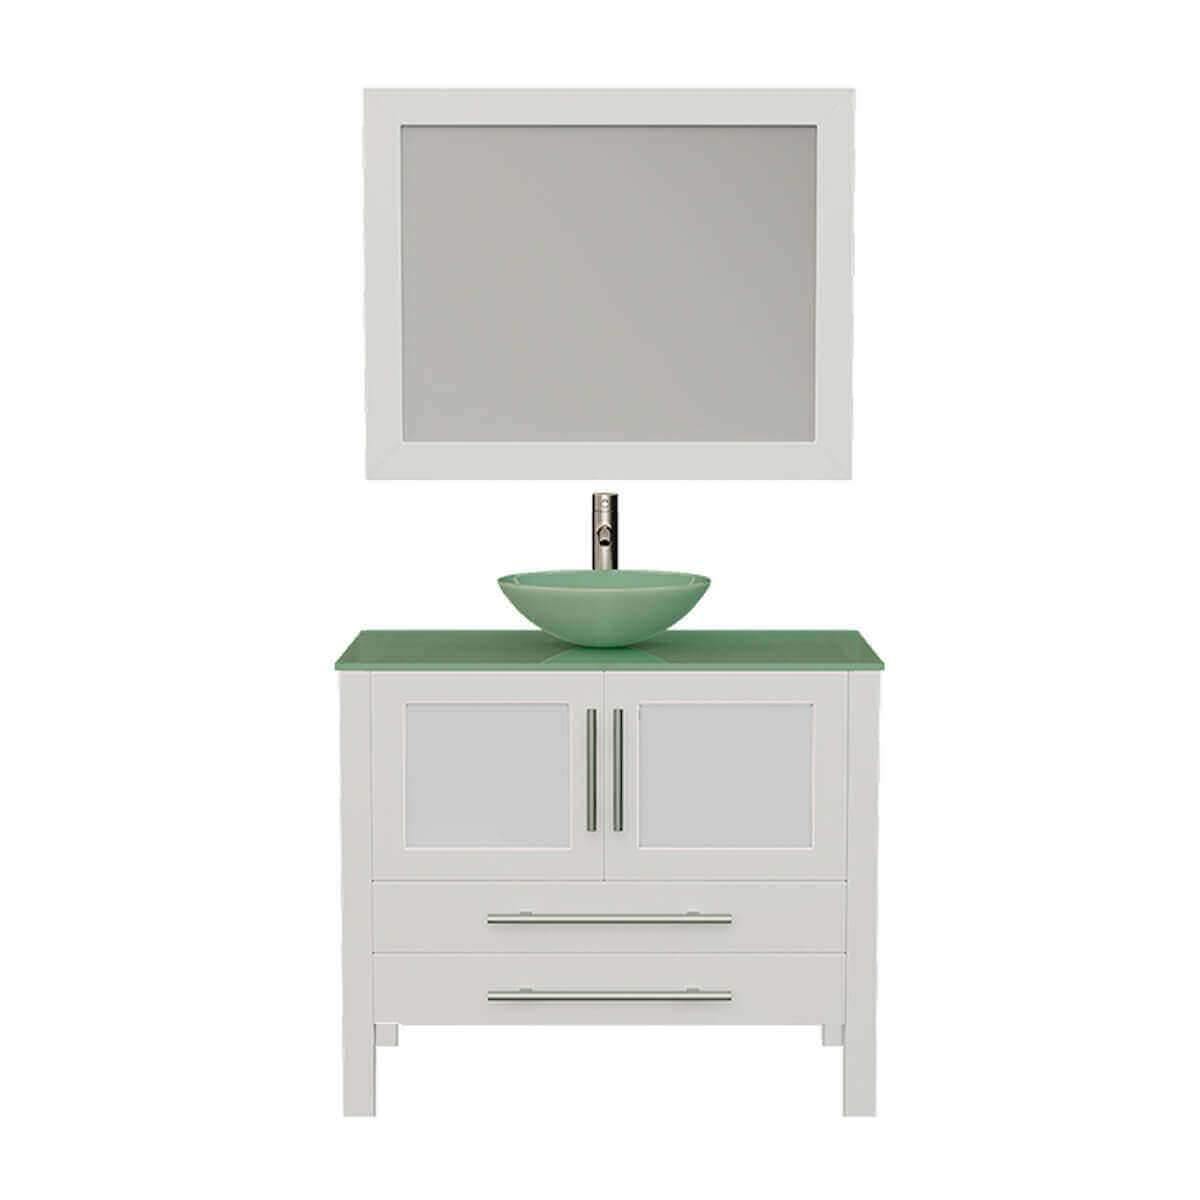 Cambridge Plumbing 36" White Solid Wood & Glass Single Vessel Sink Vanity Set with Brushed Nickel Faucet and Drain 8111BW-BN #faucet finish_brushed nickel